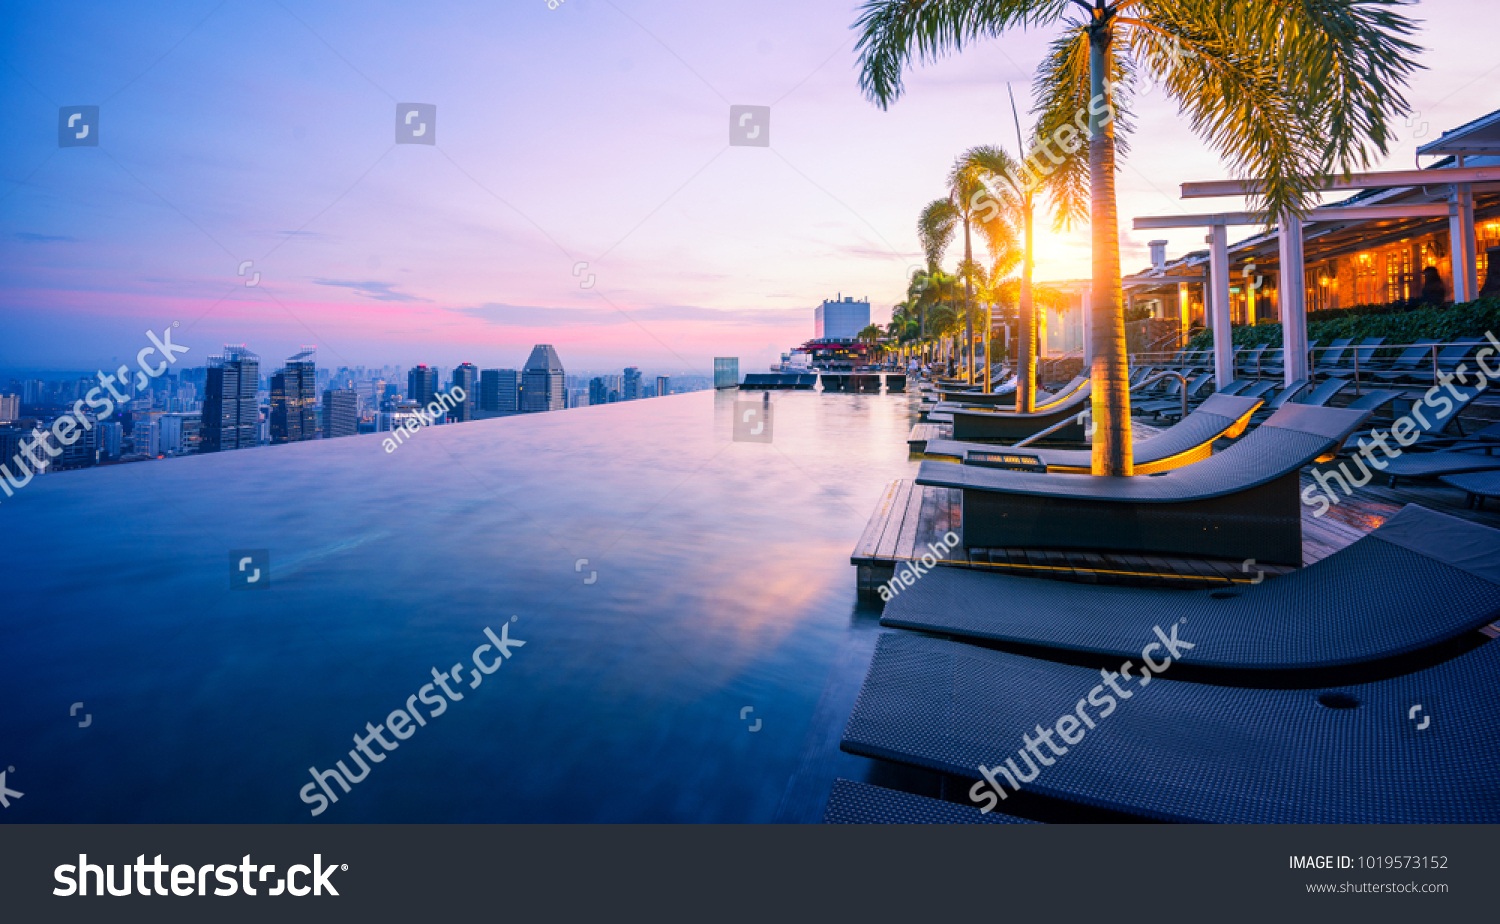 Cityscape of Singapore city with morning sunrise sky #1019573152